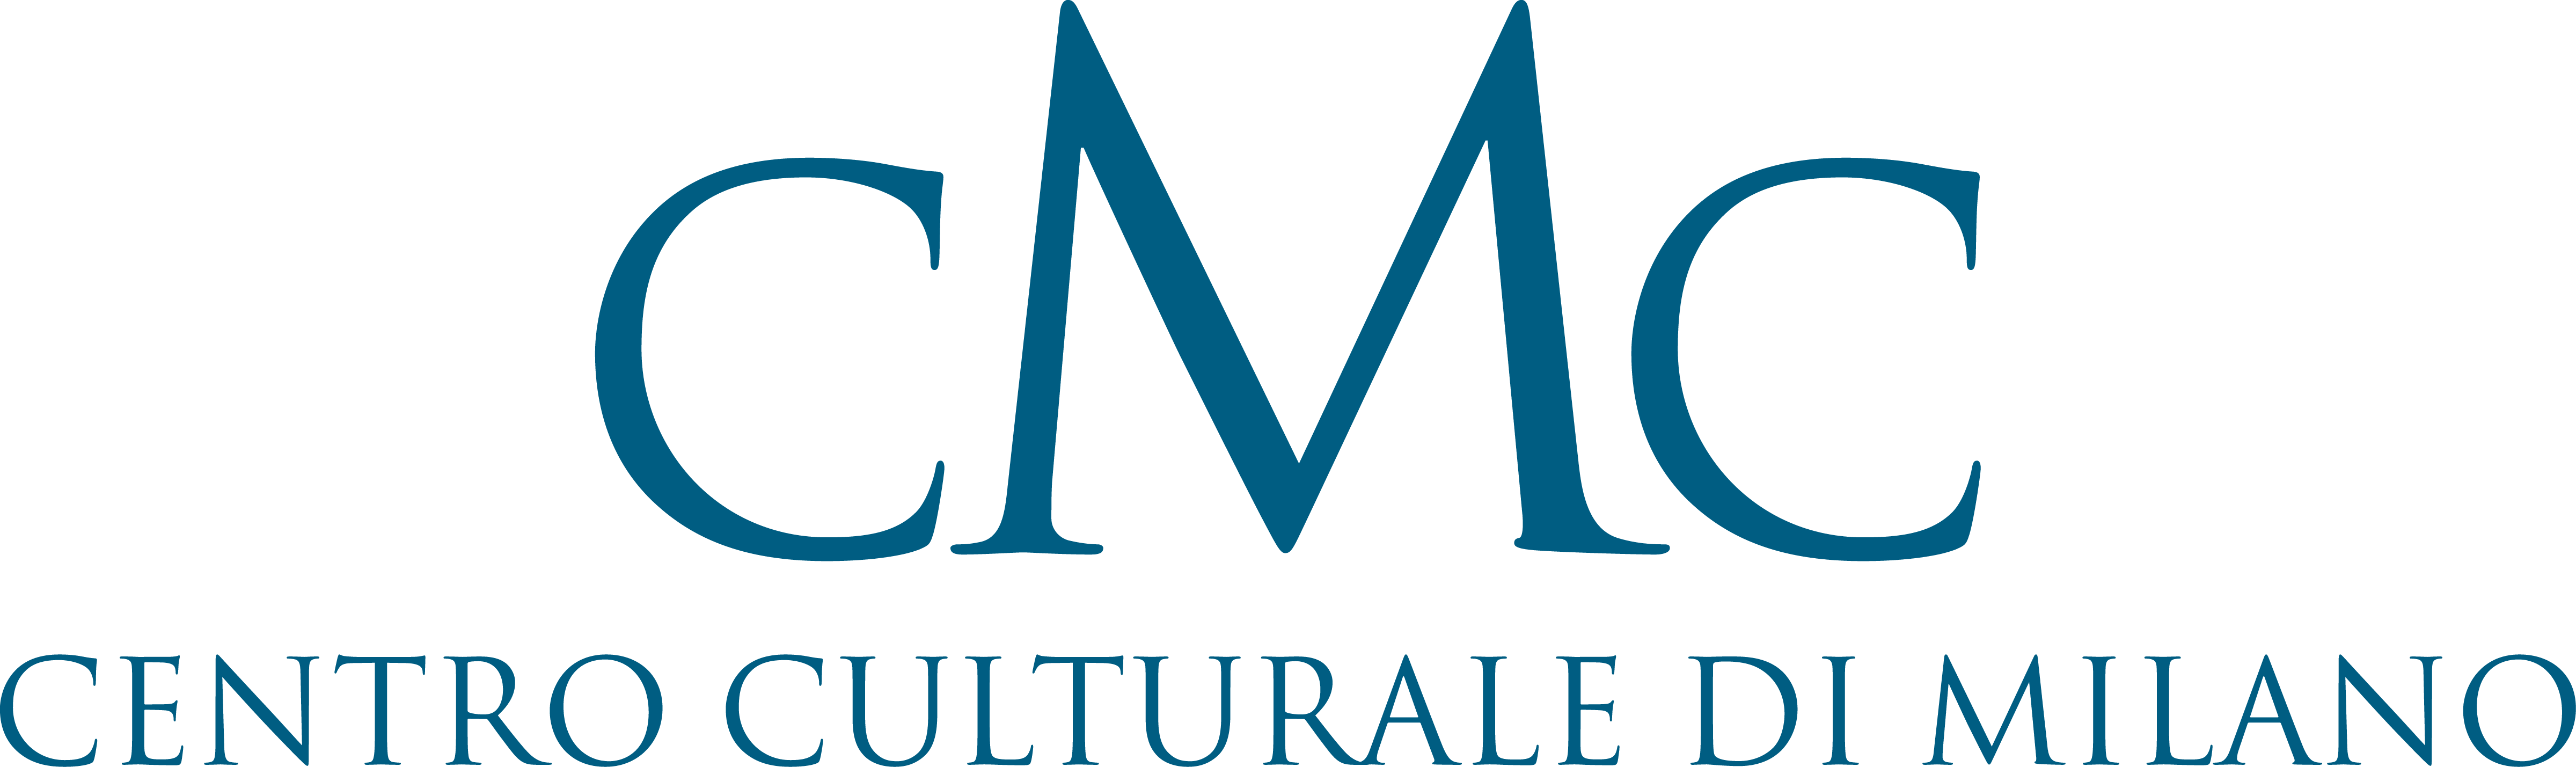 cmc logo blu